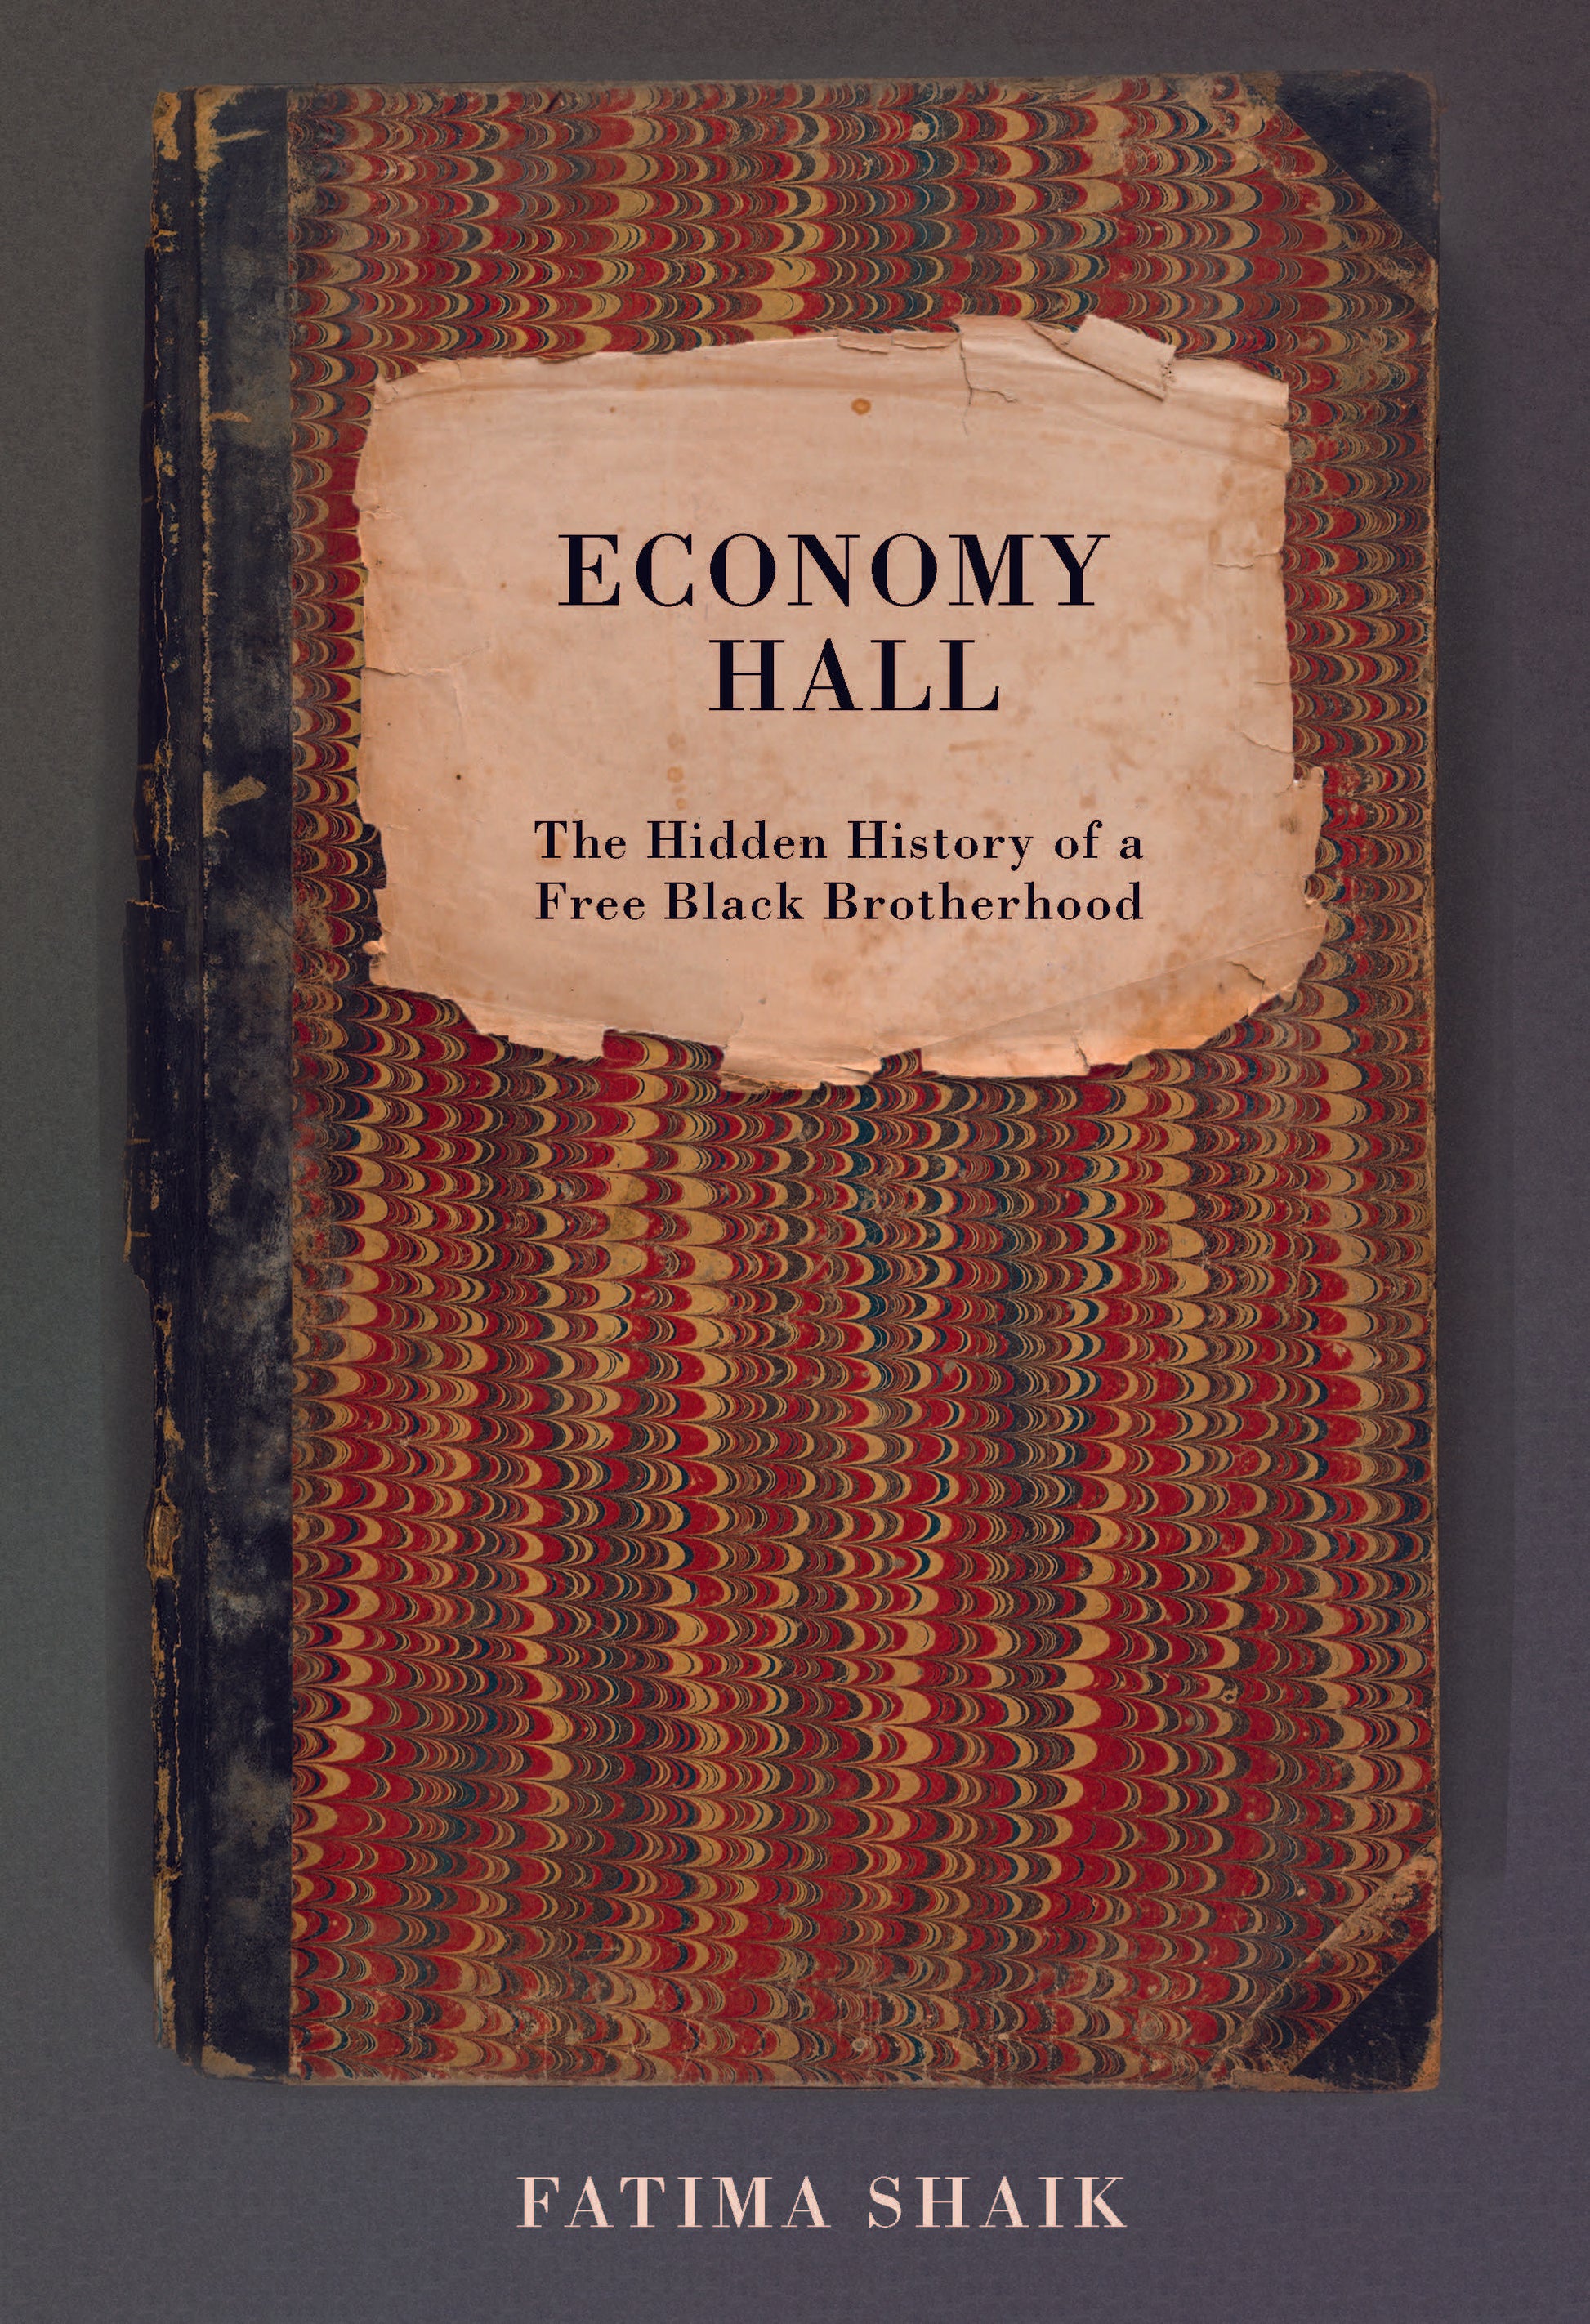 ECONOMY HALL THE HIDDEN HISTORY OF A FREE BLACK BROTHERHOOD